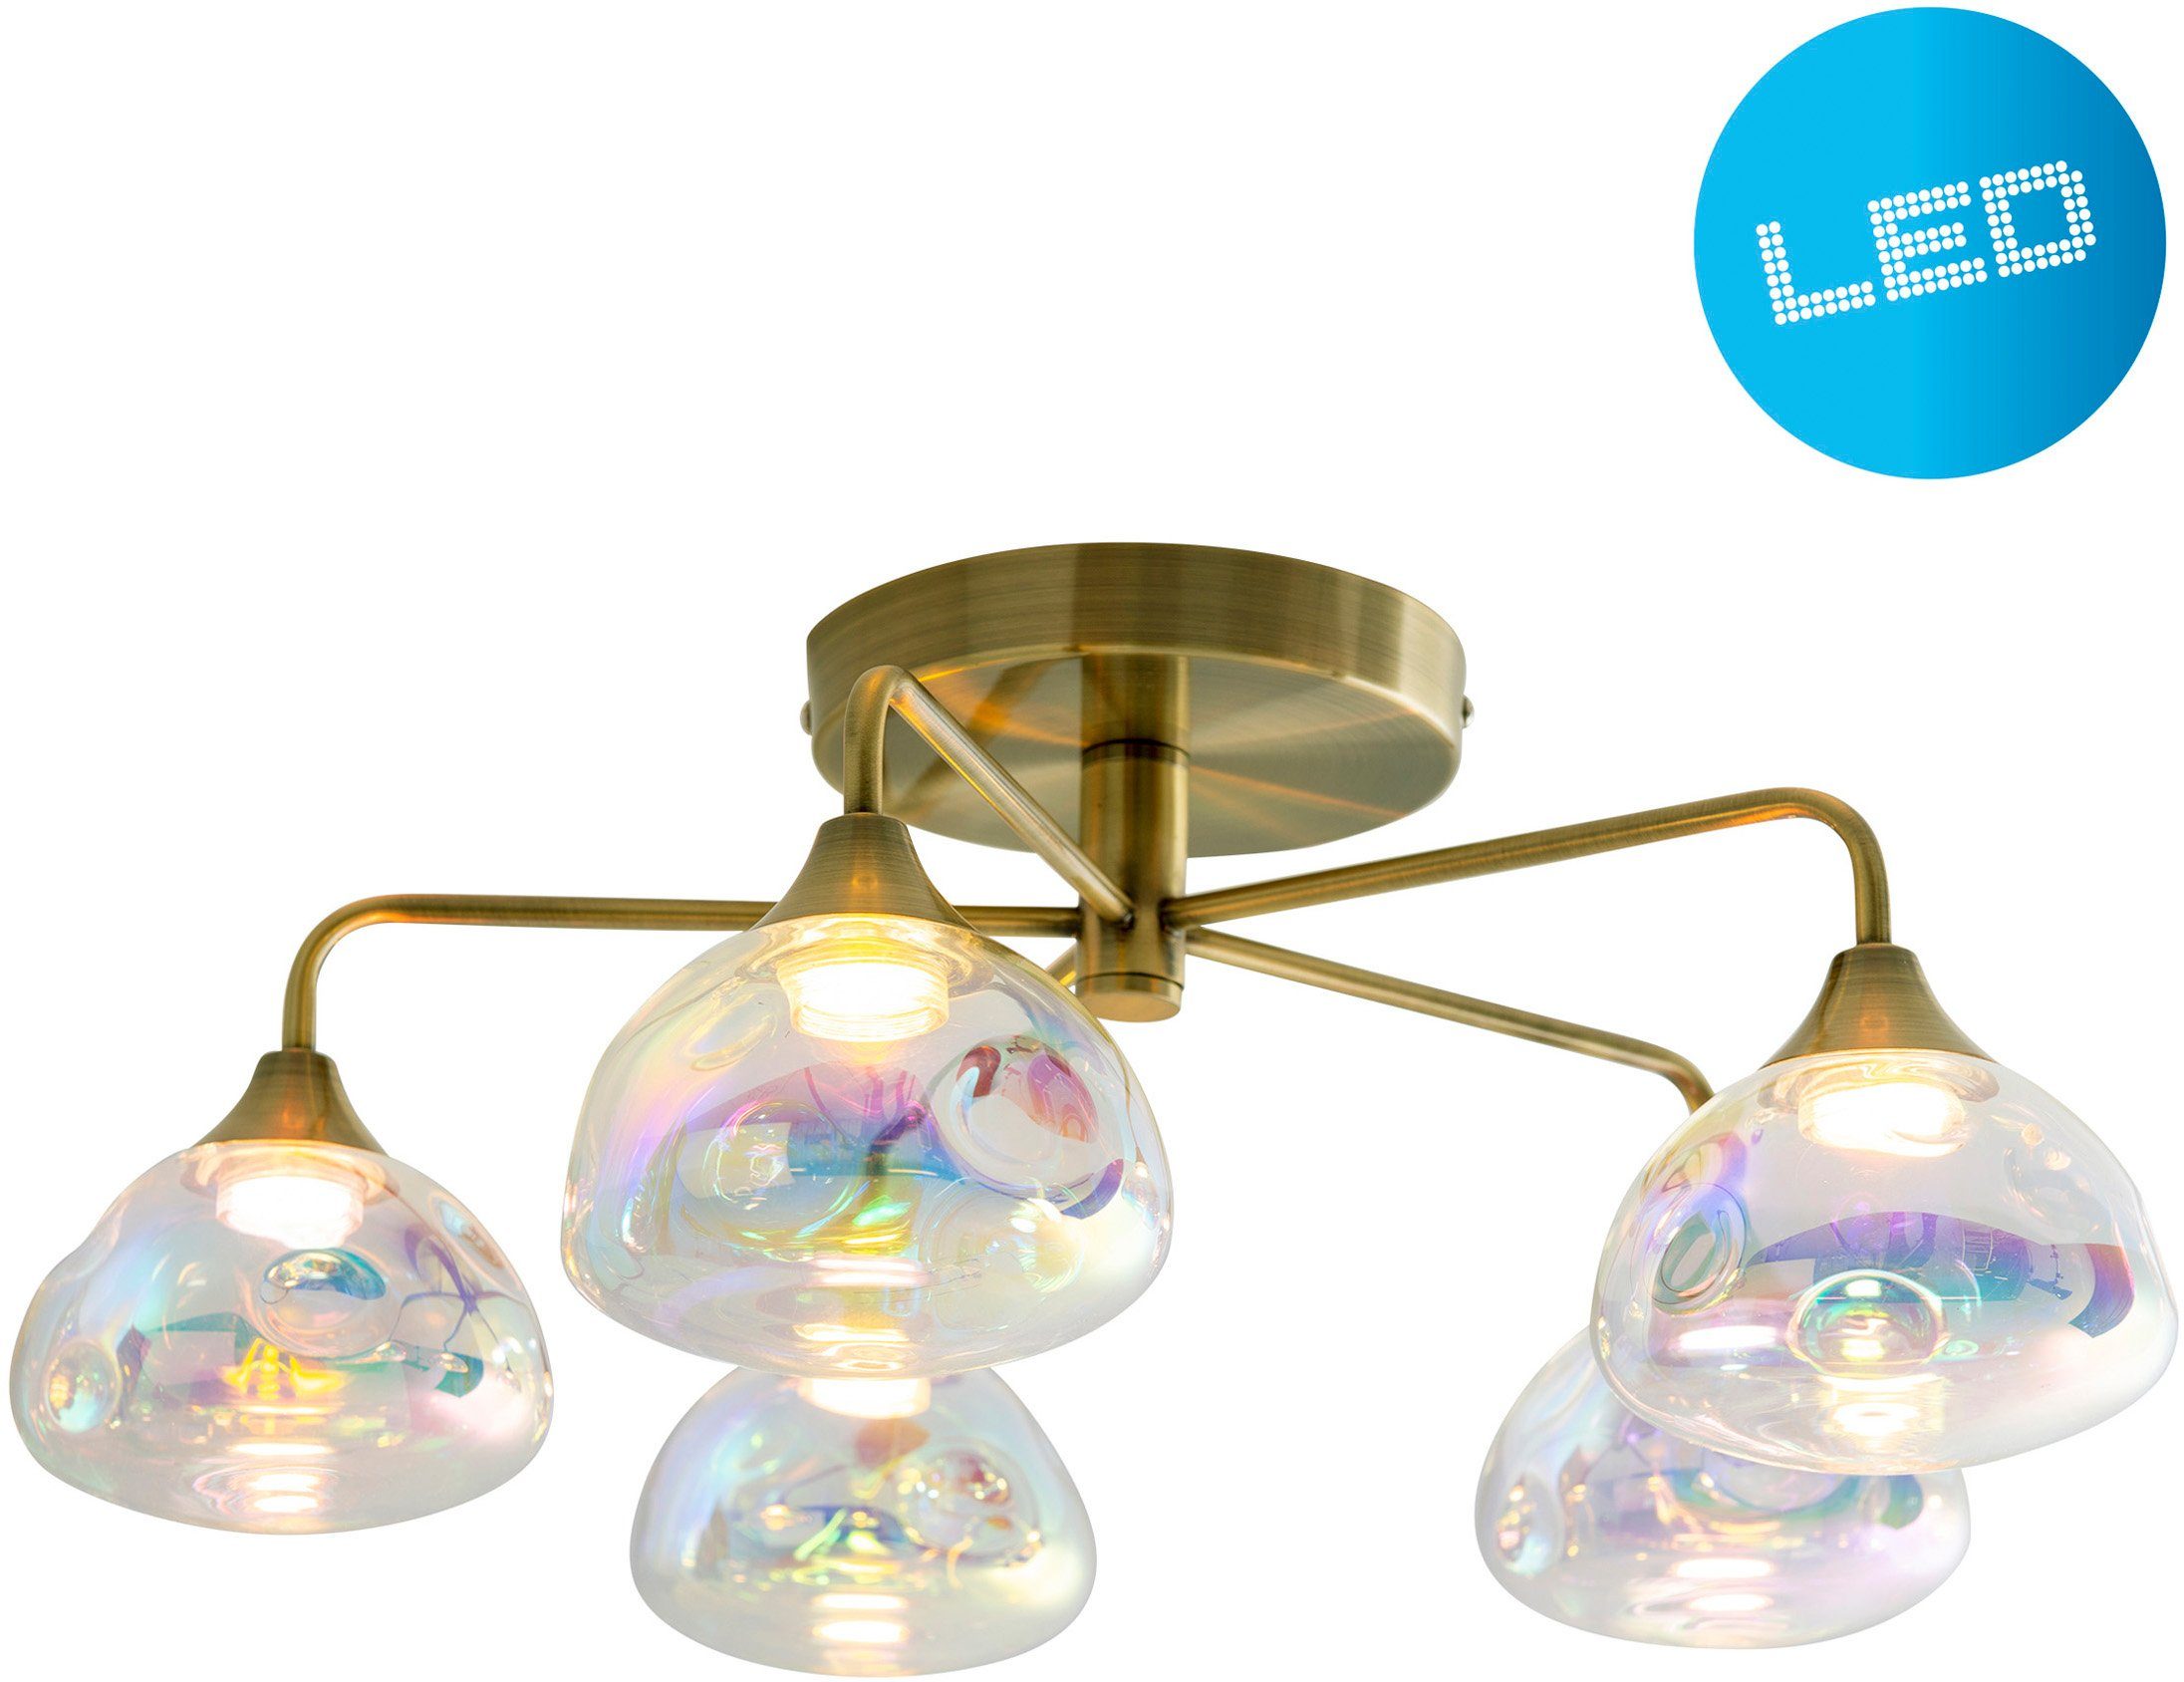 LED flg. warmweiß näve Glas LEDs fest 5 incl. Warmweiß, Varna, Deckenleuchte Gestell integriert, messing LED irisierendes